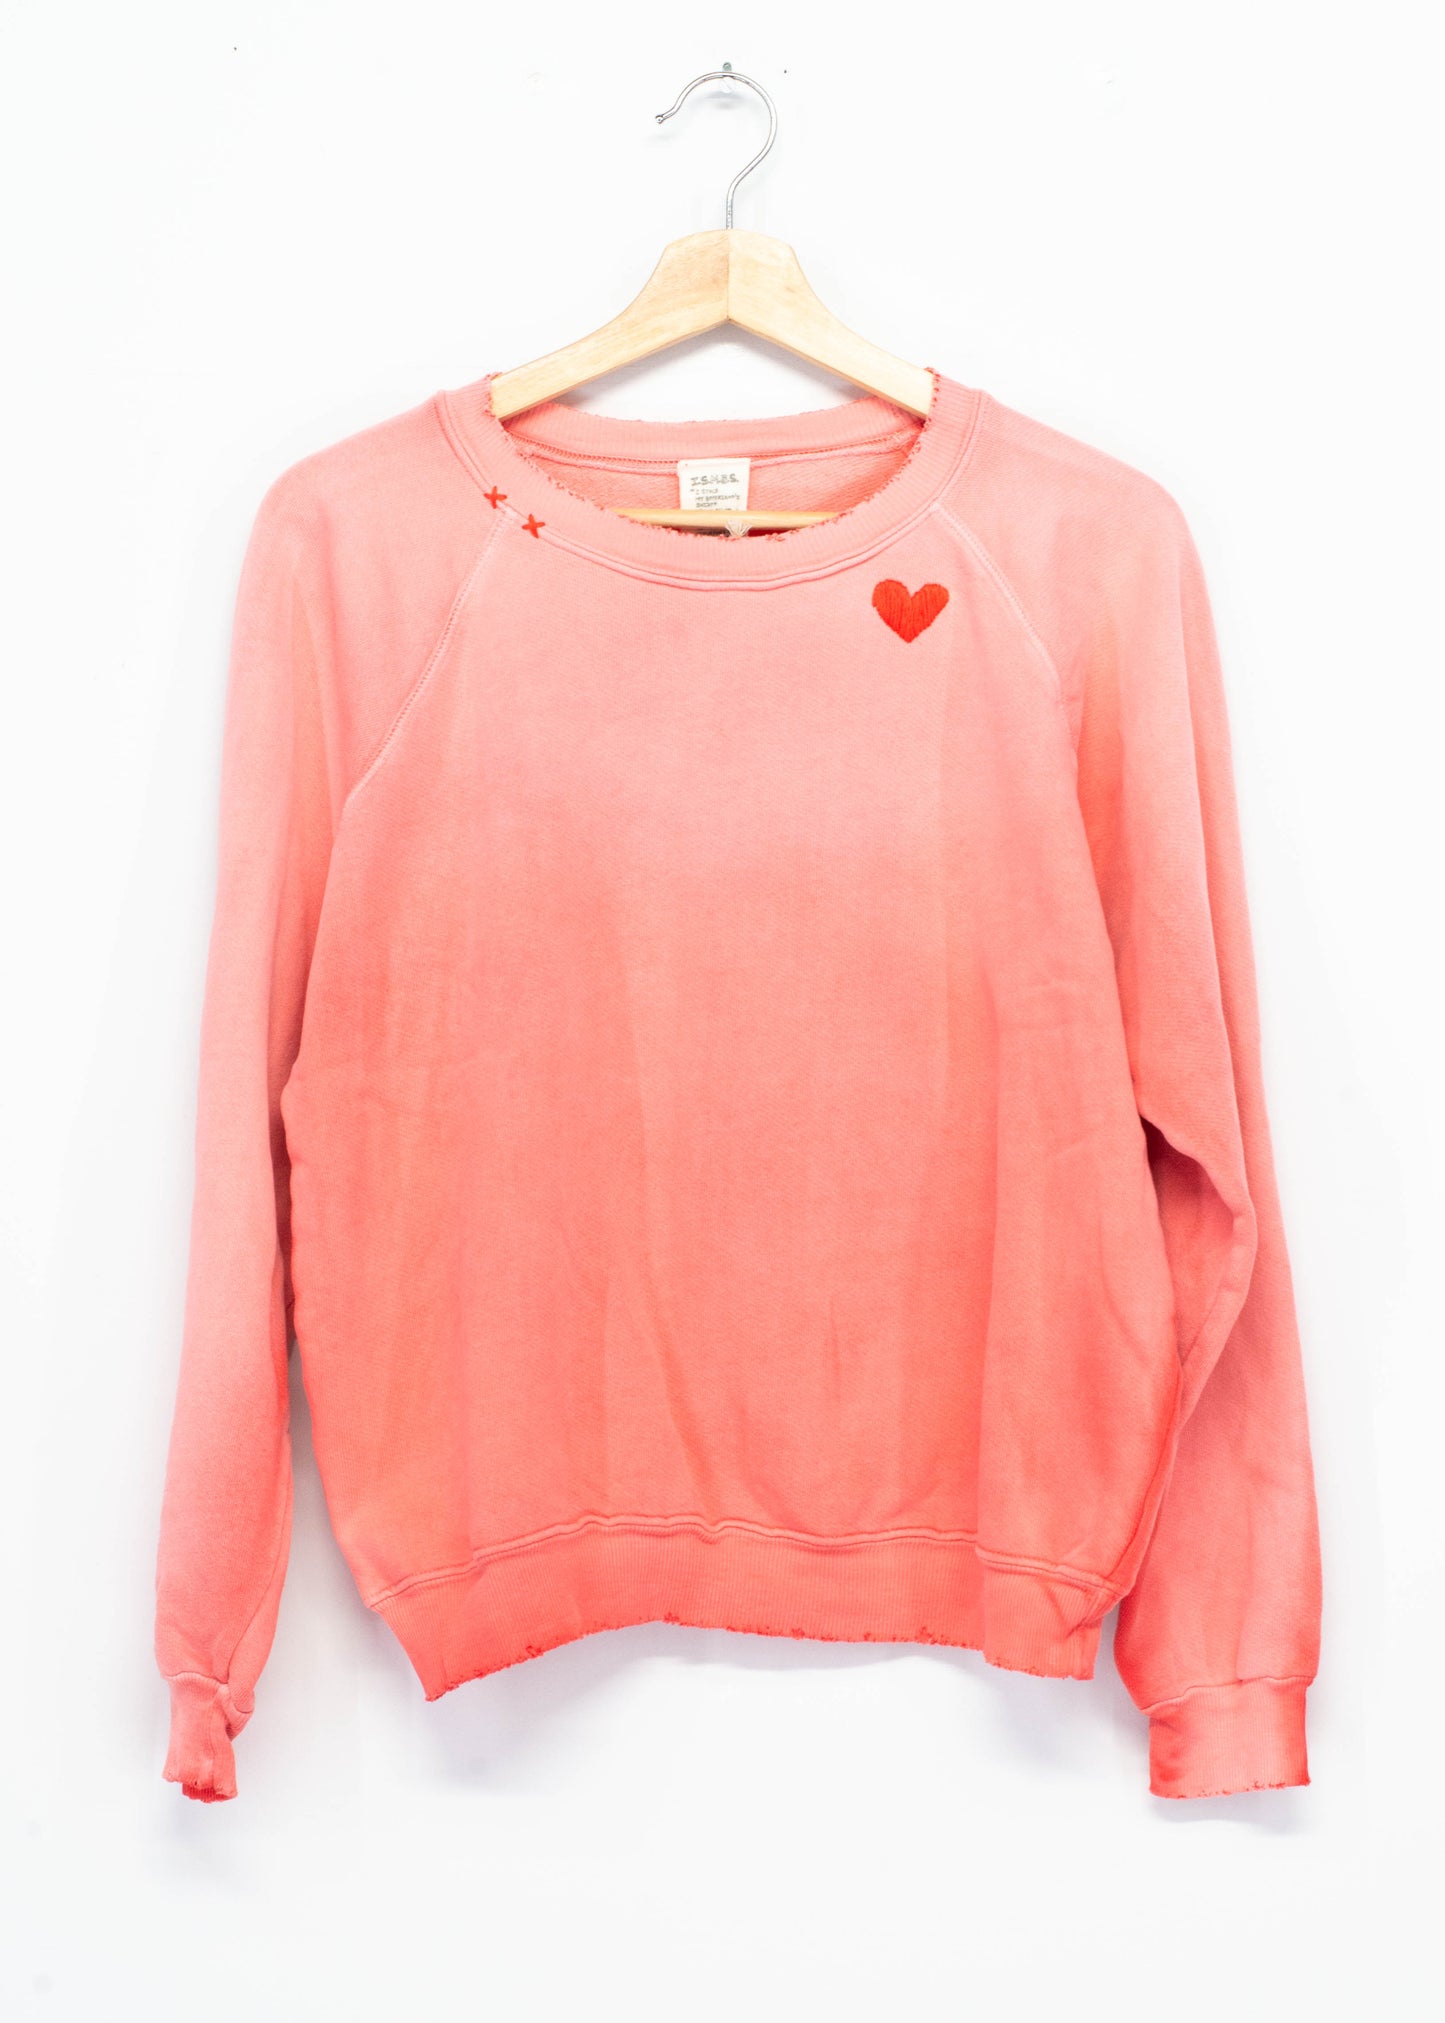 Heart Sweatshirt (9Colors)